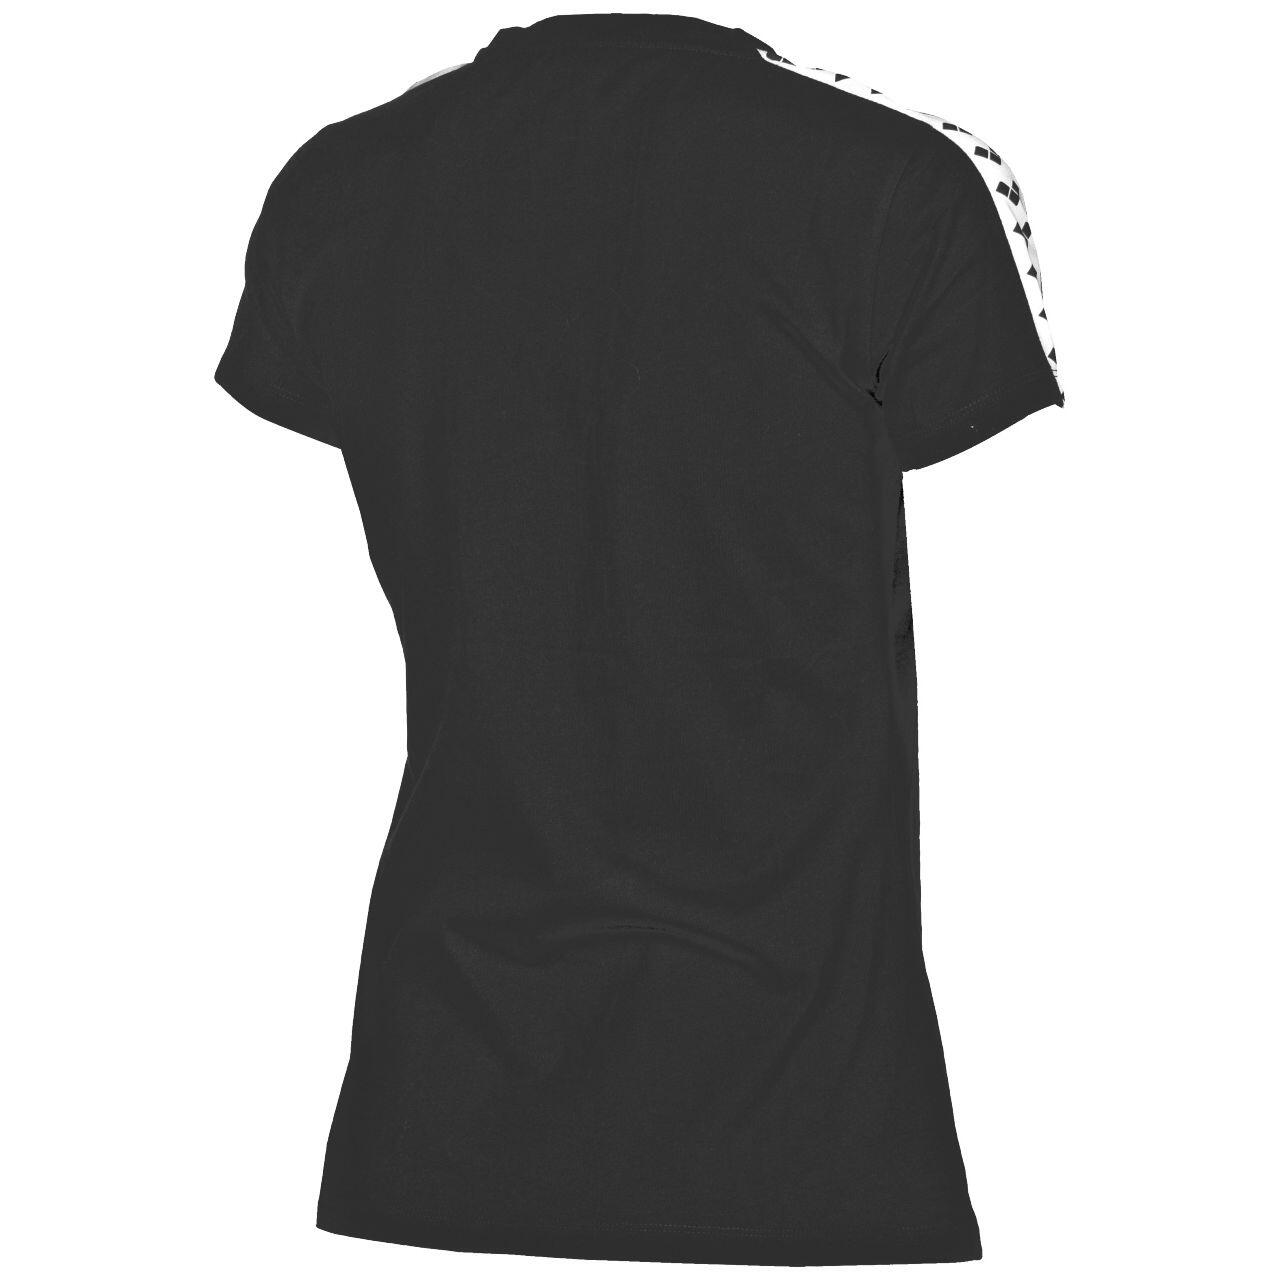 Arena Women's Team T-shirt - Black 2/5